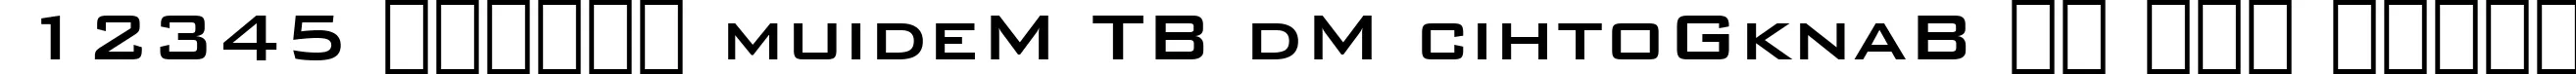 Dynamic BankGothic Md BT Medium Font Preview https://safirsoft.com